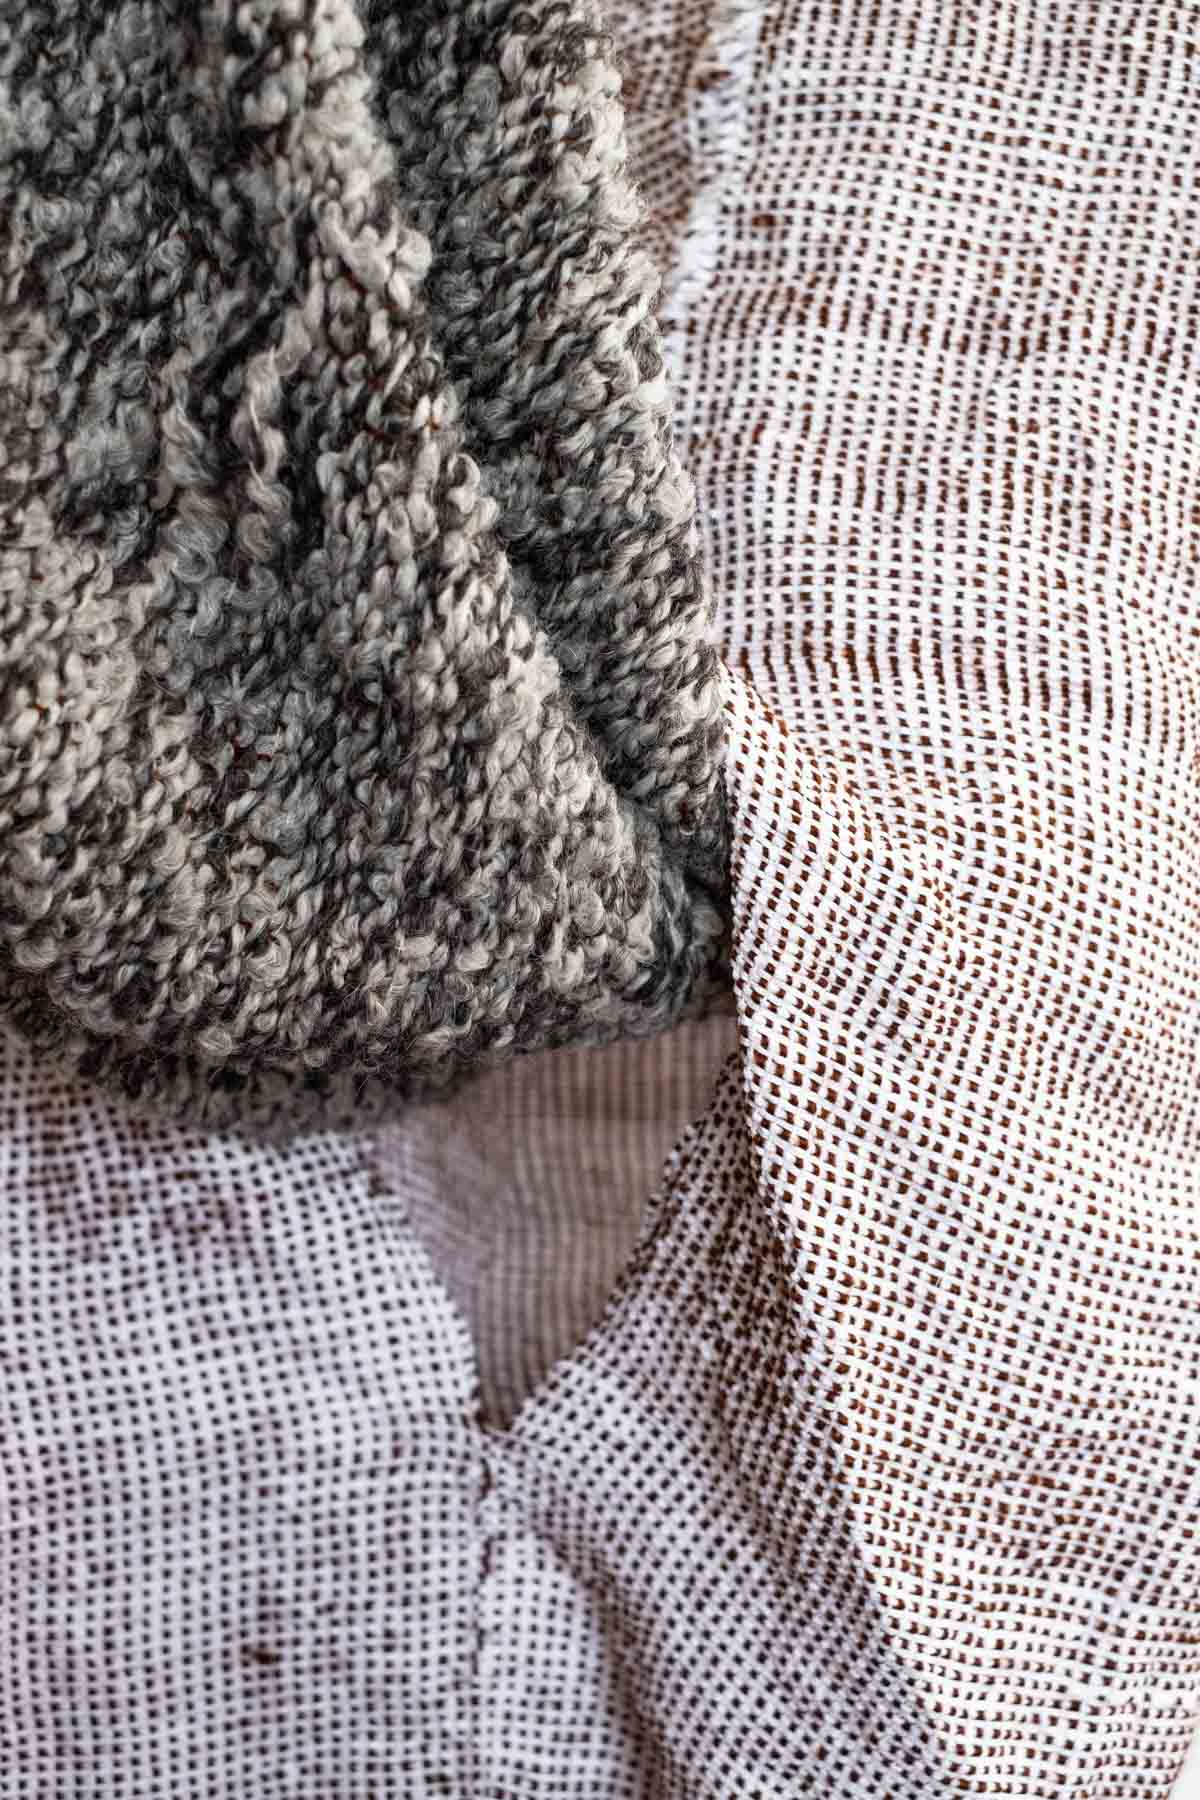 Ventricolo In Fuga (2020) 76x33x36 cm Paper yarn, Alpaca, Lambswool